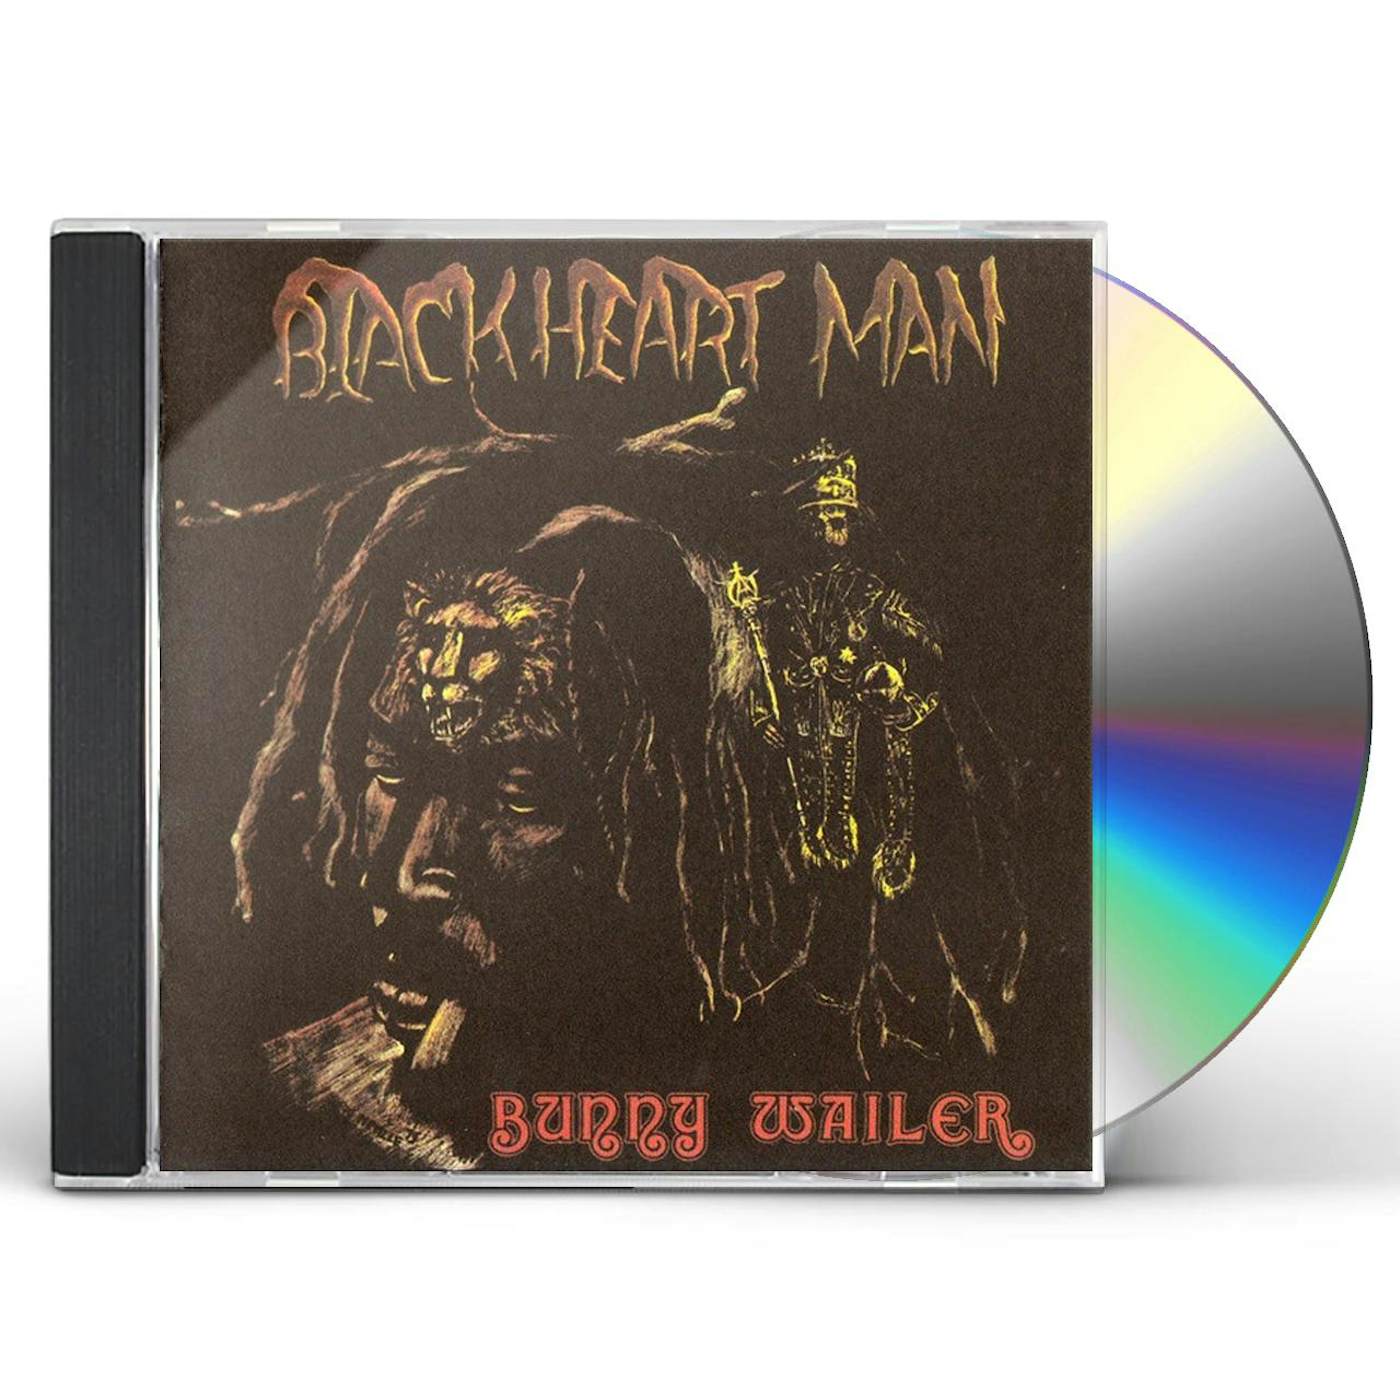 Bunny Wailer BLACKHEART MAN CD